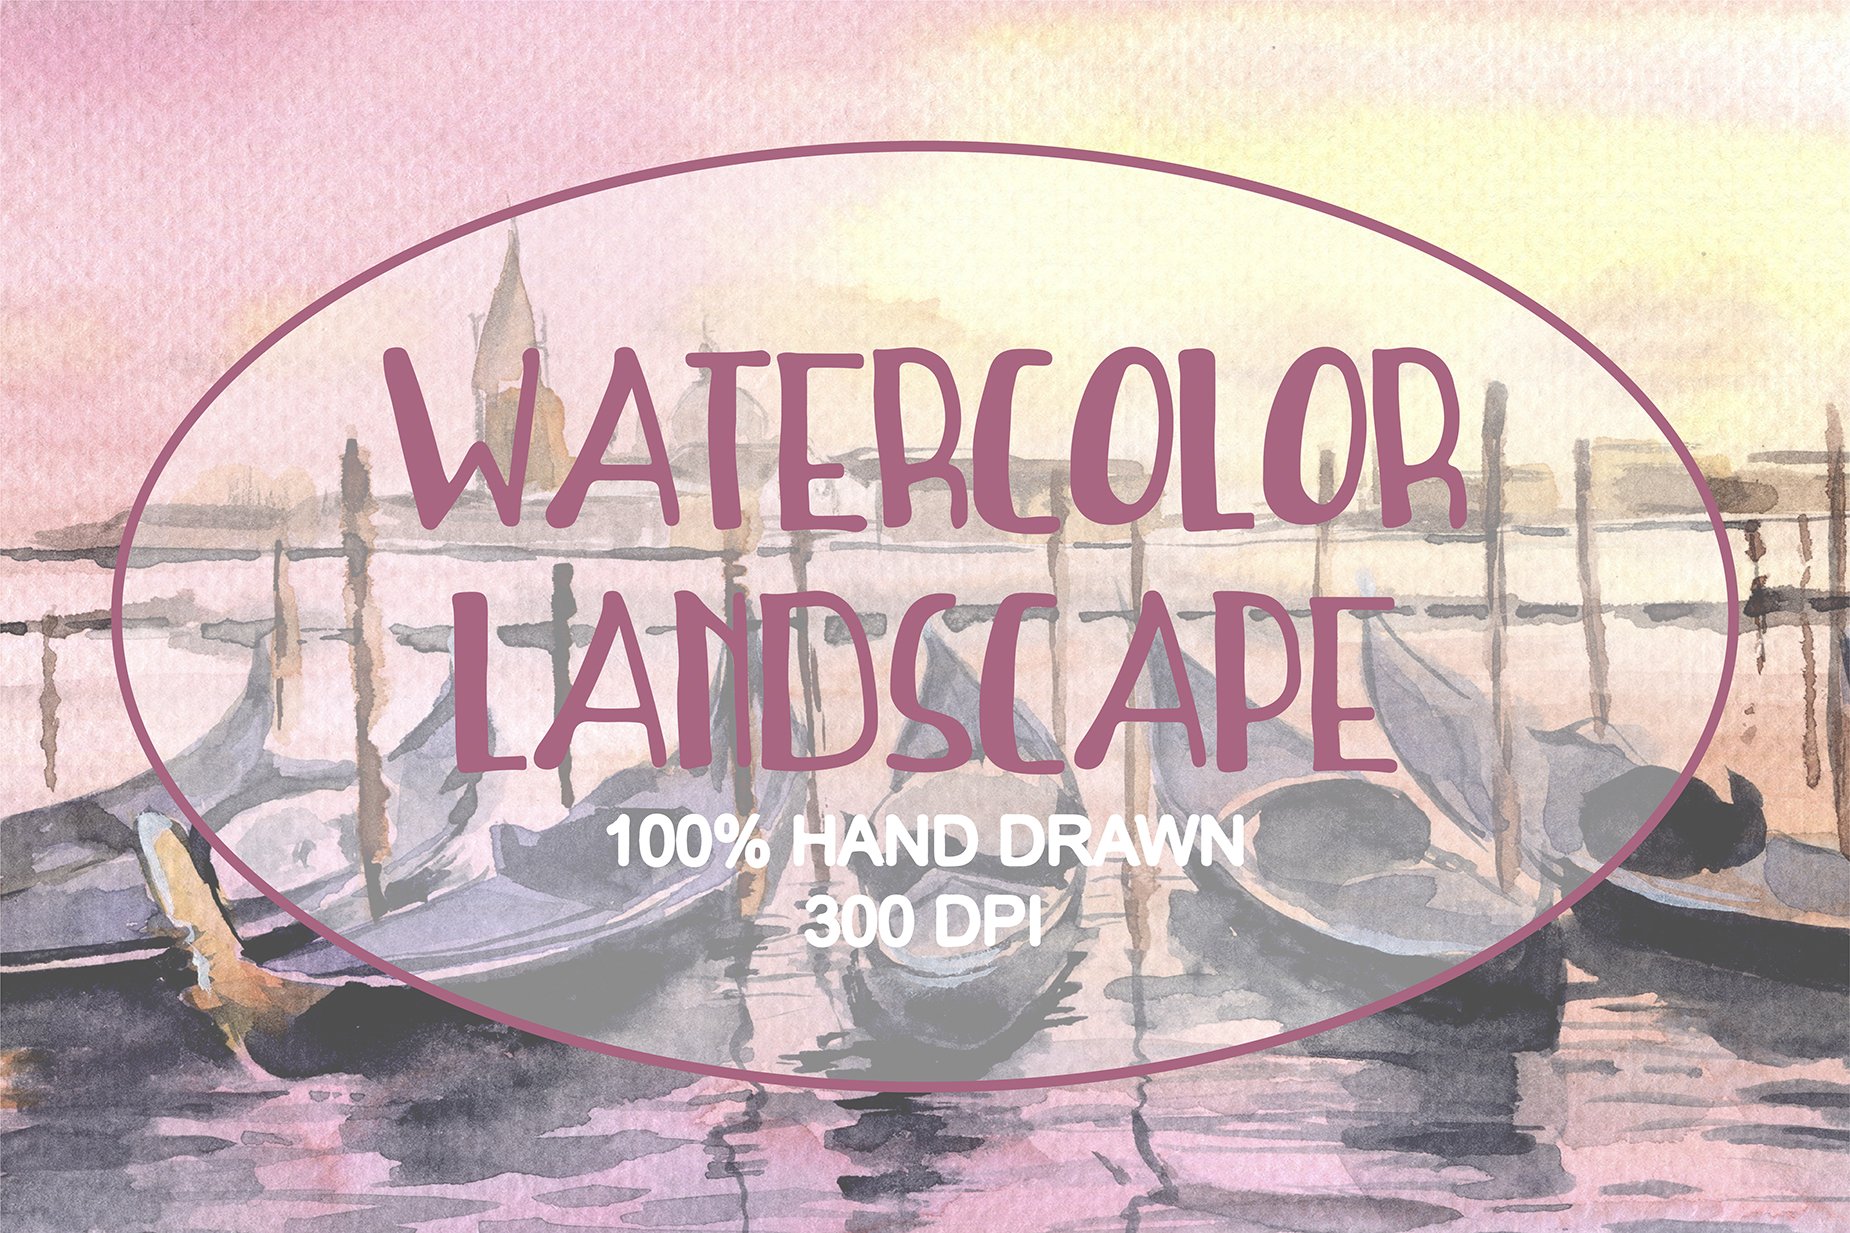 Watercolor Venice Sunset Landscape cover image.